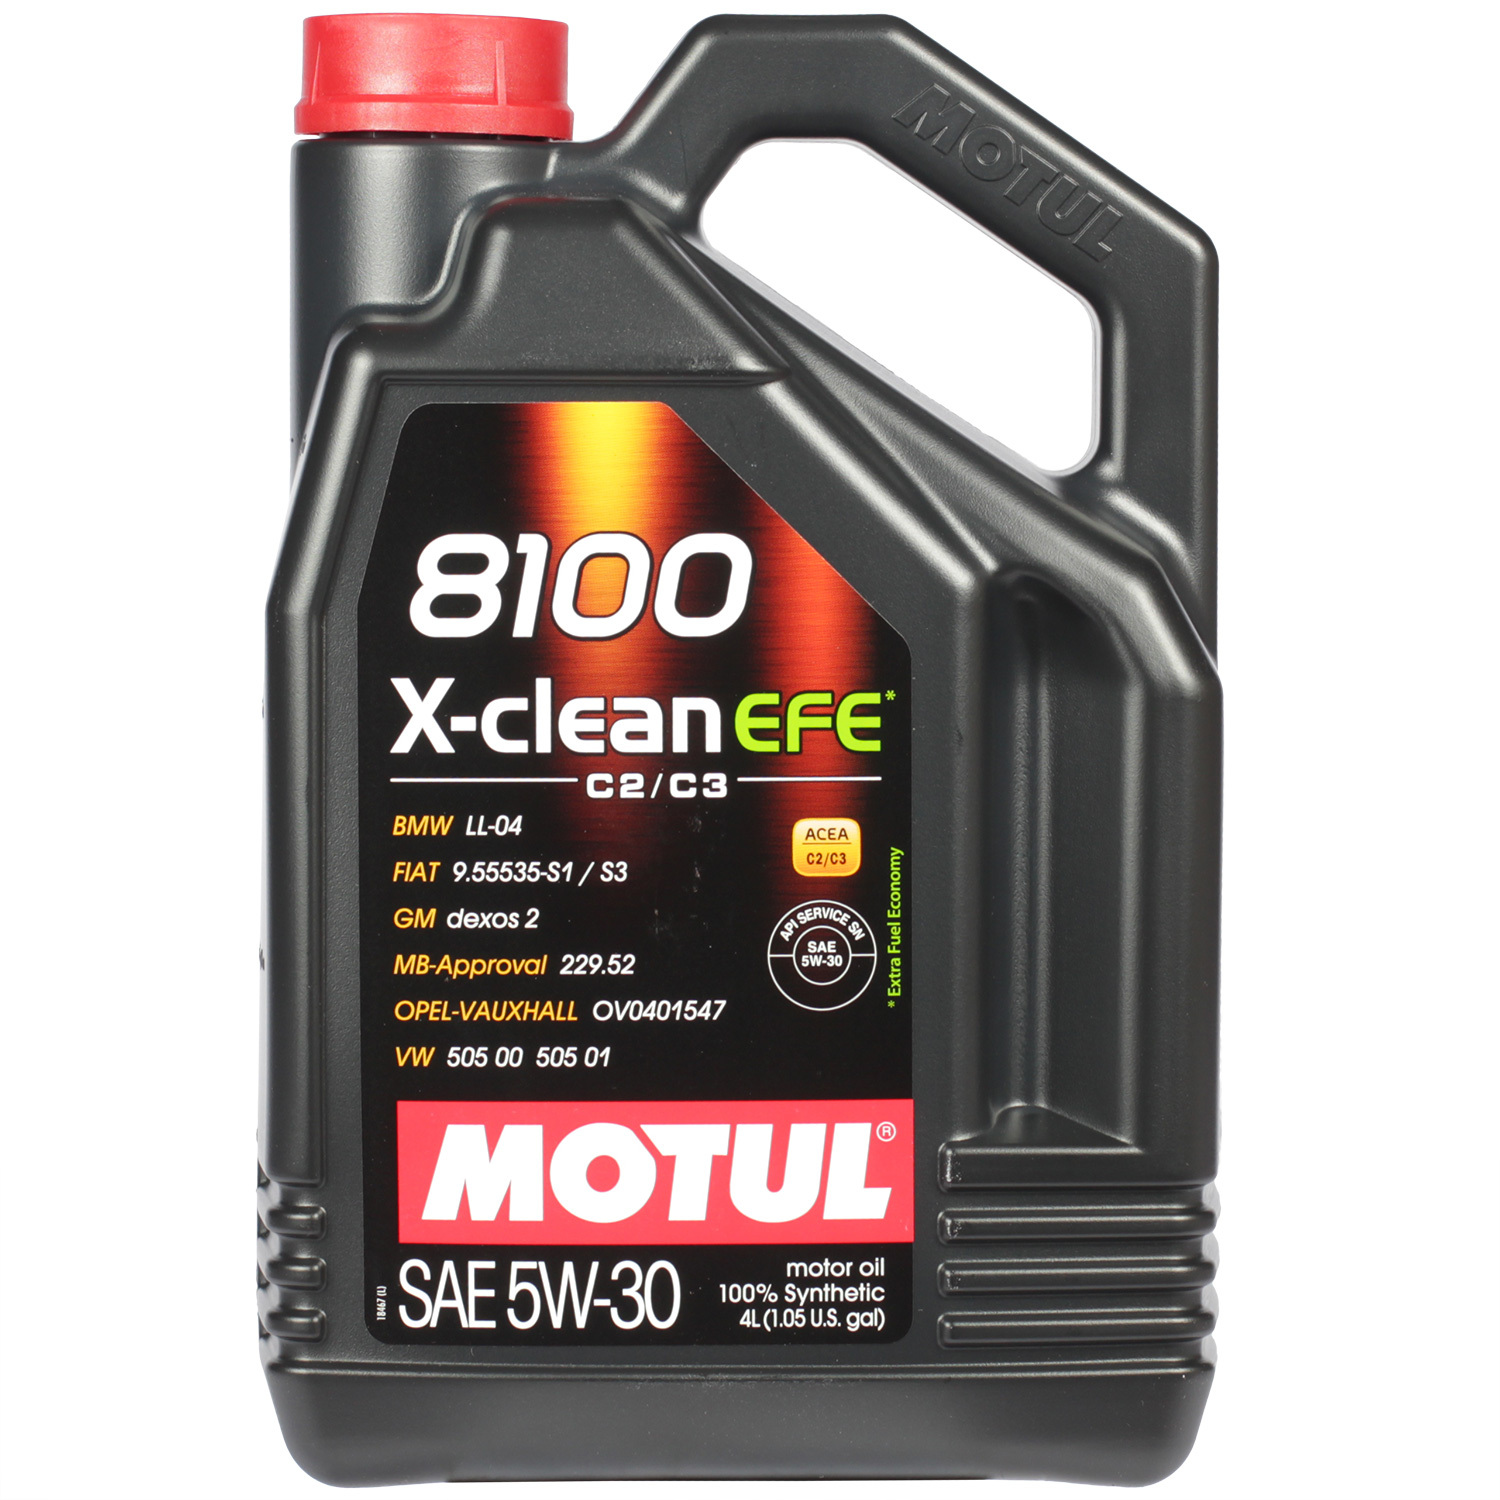 Motul Моторное масло Motul 8100 X-clean EFE 5W-30, 4 л масло моторное motul 8100 x cess gen2 5w 40 1 л 109774